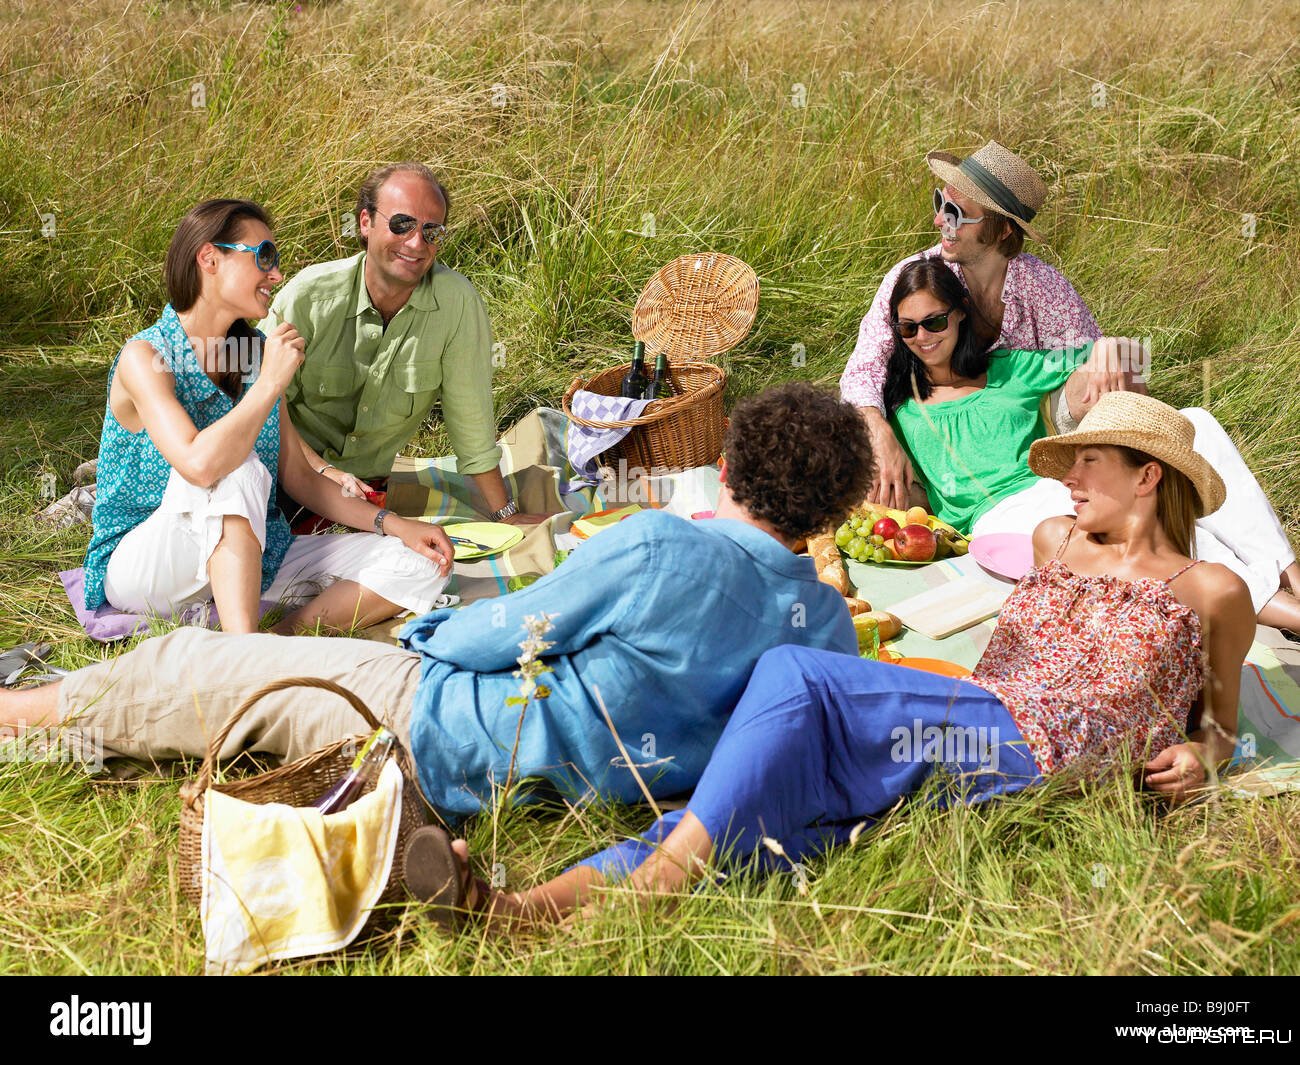 Русские на природе отдыхали. Пикник на природе. Организация пикника на природе. Люди на природе пикник. Отдыхающие люди на природе.